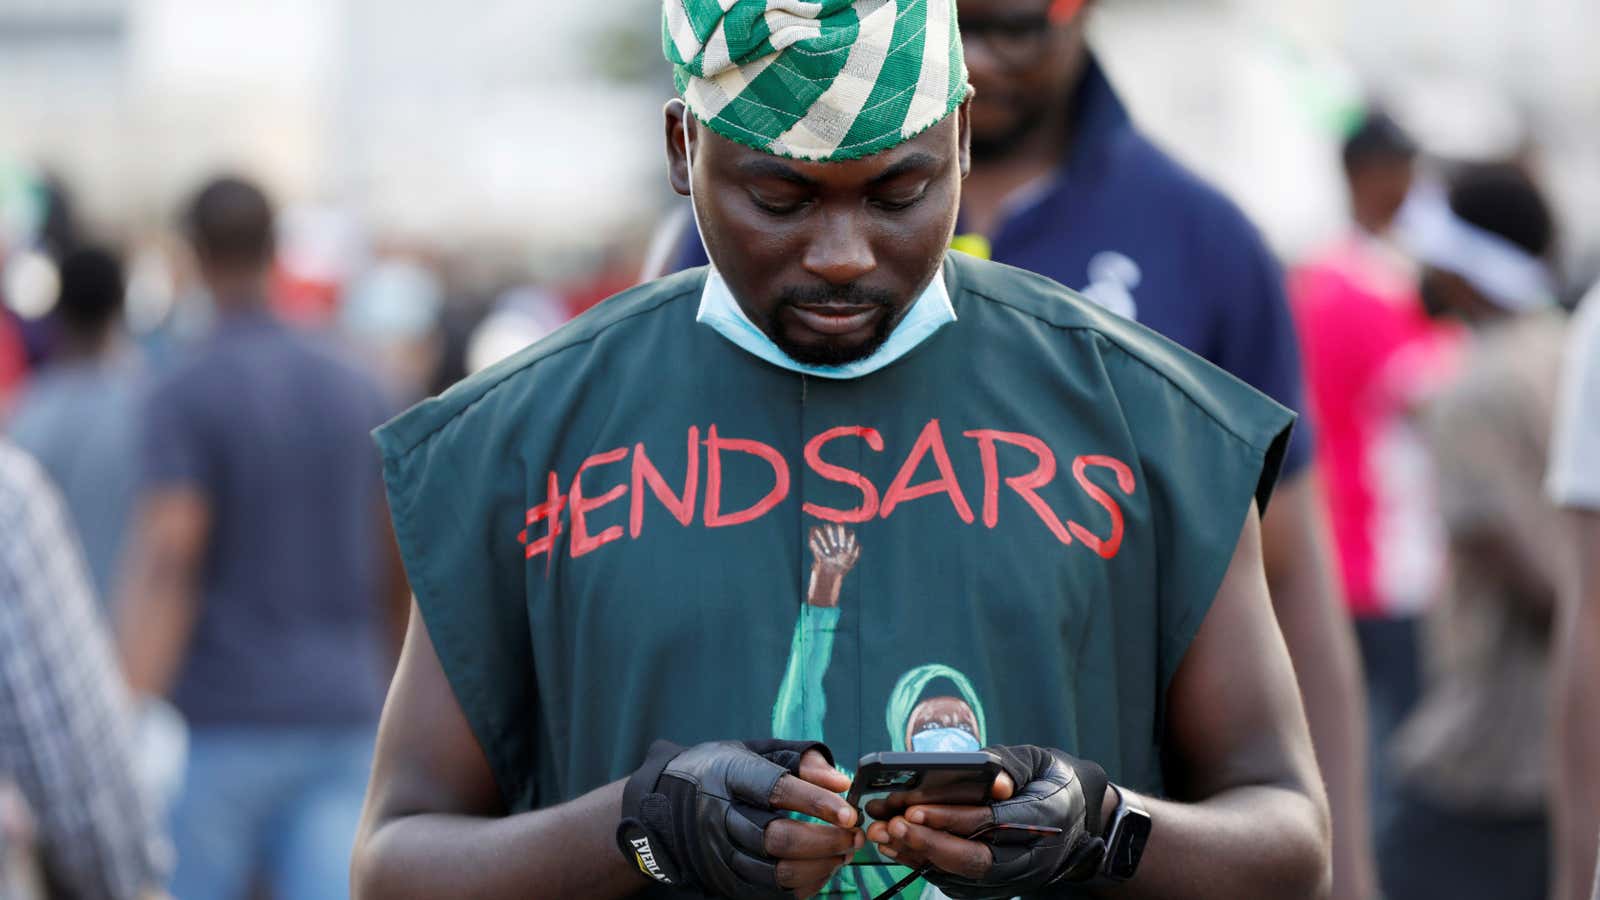 “Where do we go next?” An EndSARS protestor in Lagos, Nigeria Oct. 17, 2020.